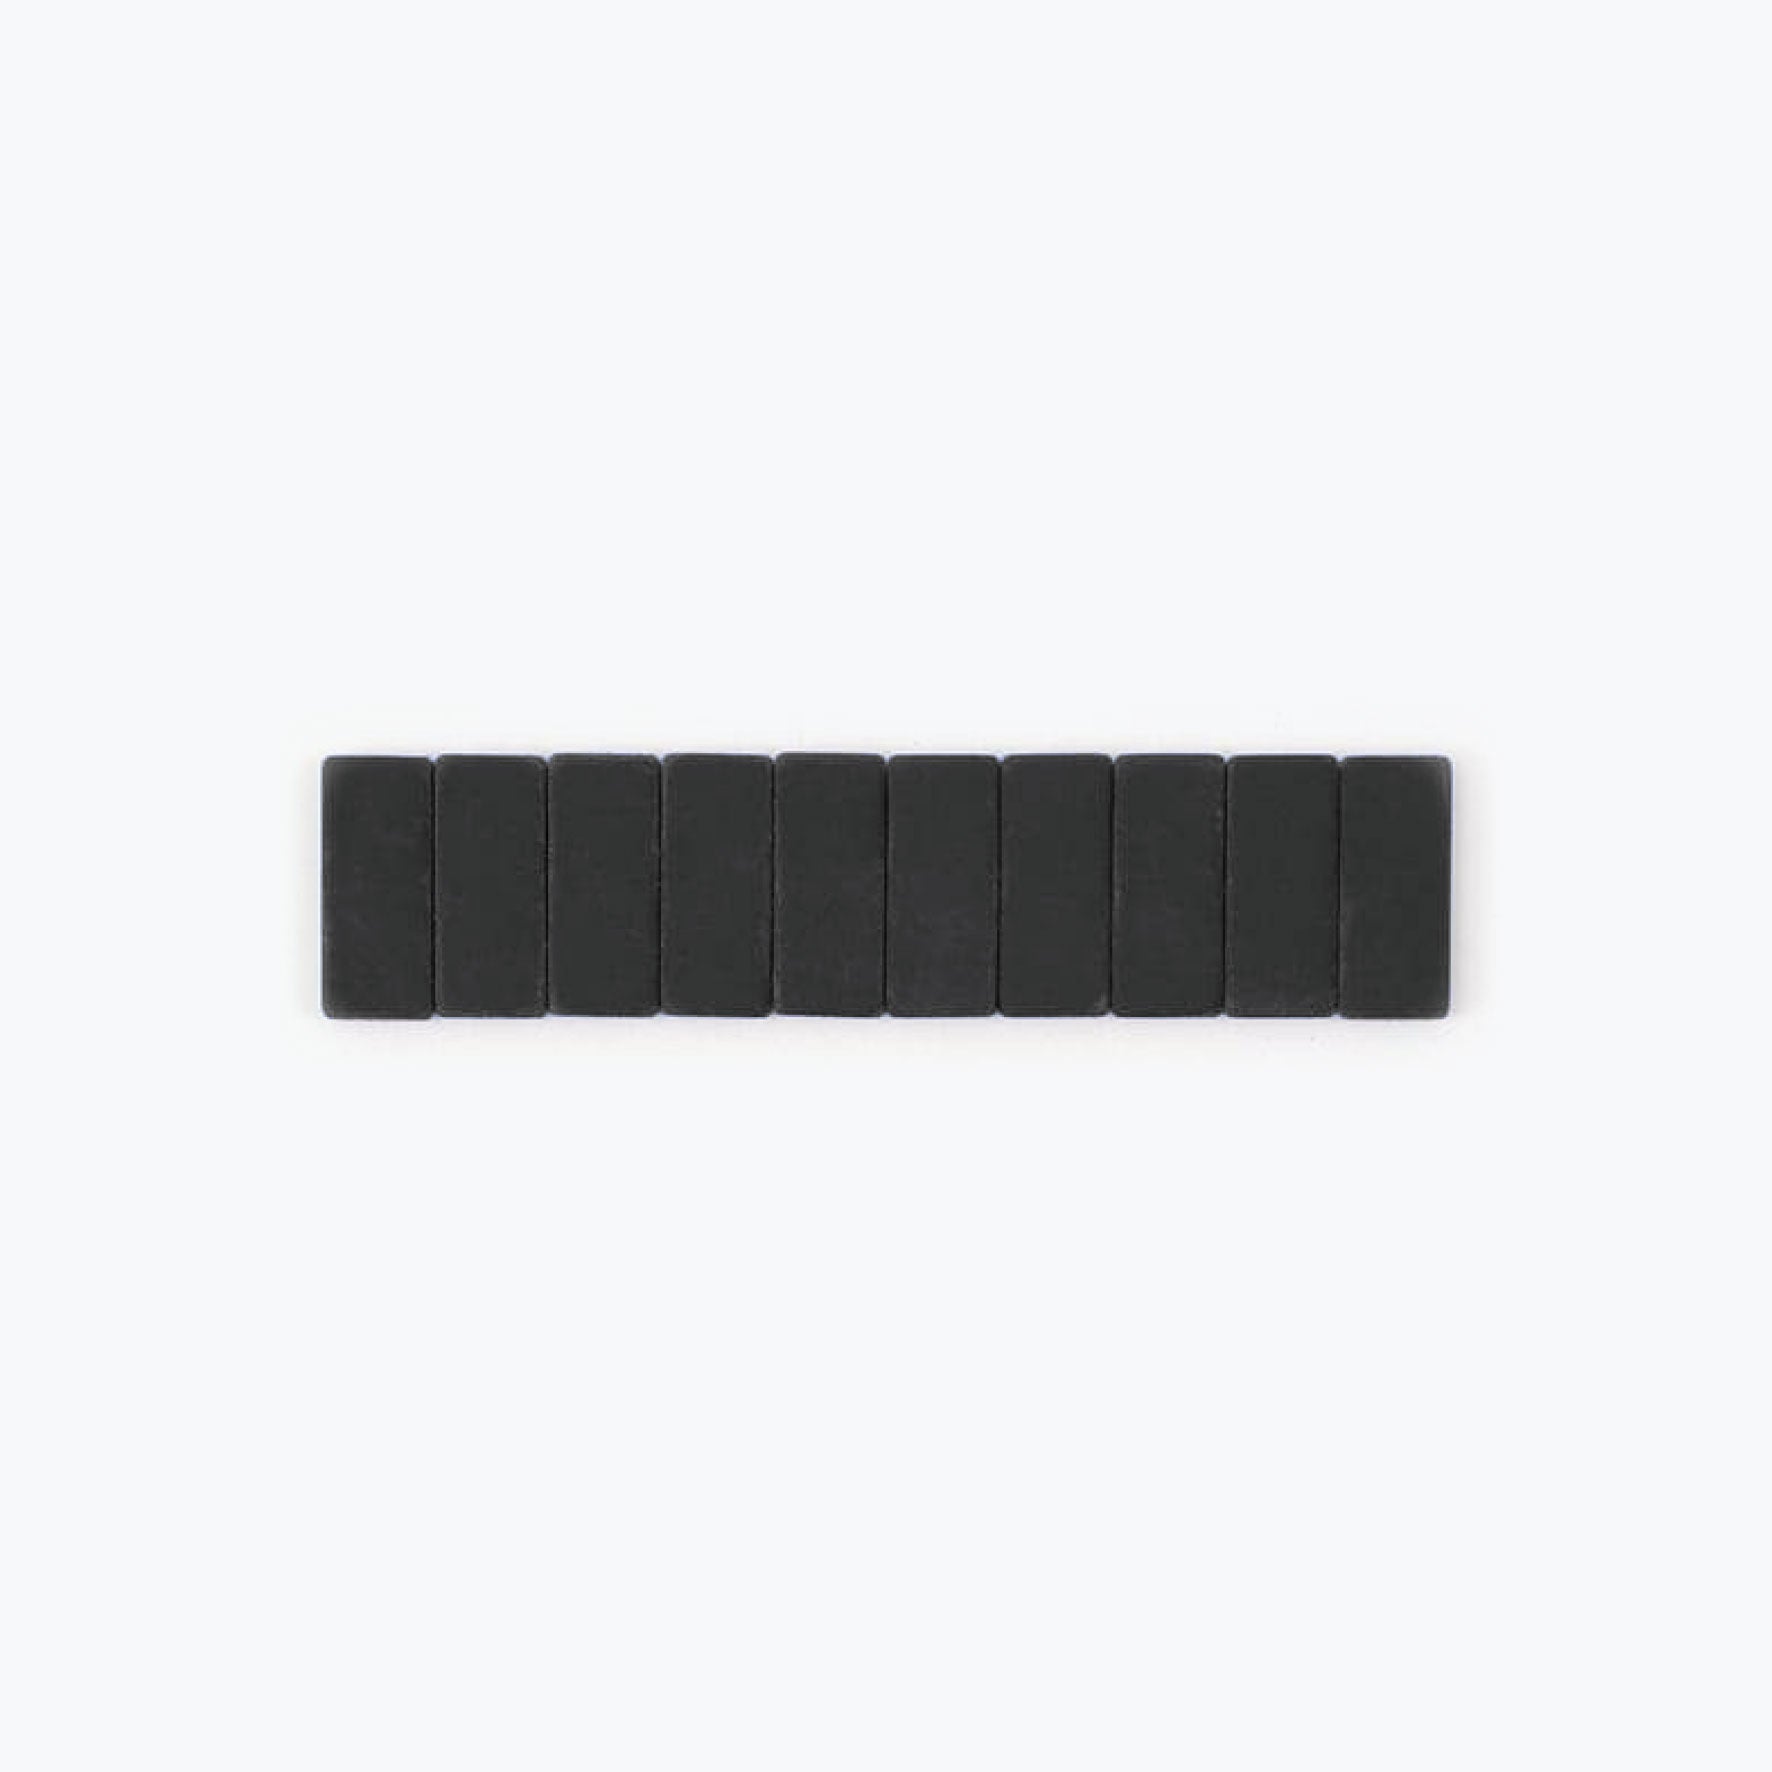 Palomino Blackwing - Replacement Erasers - 10 Pack - Black